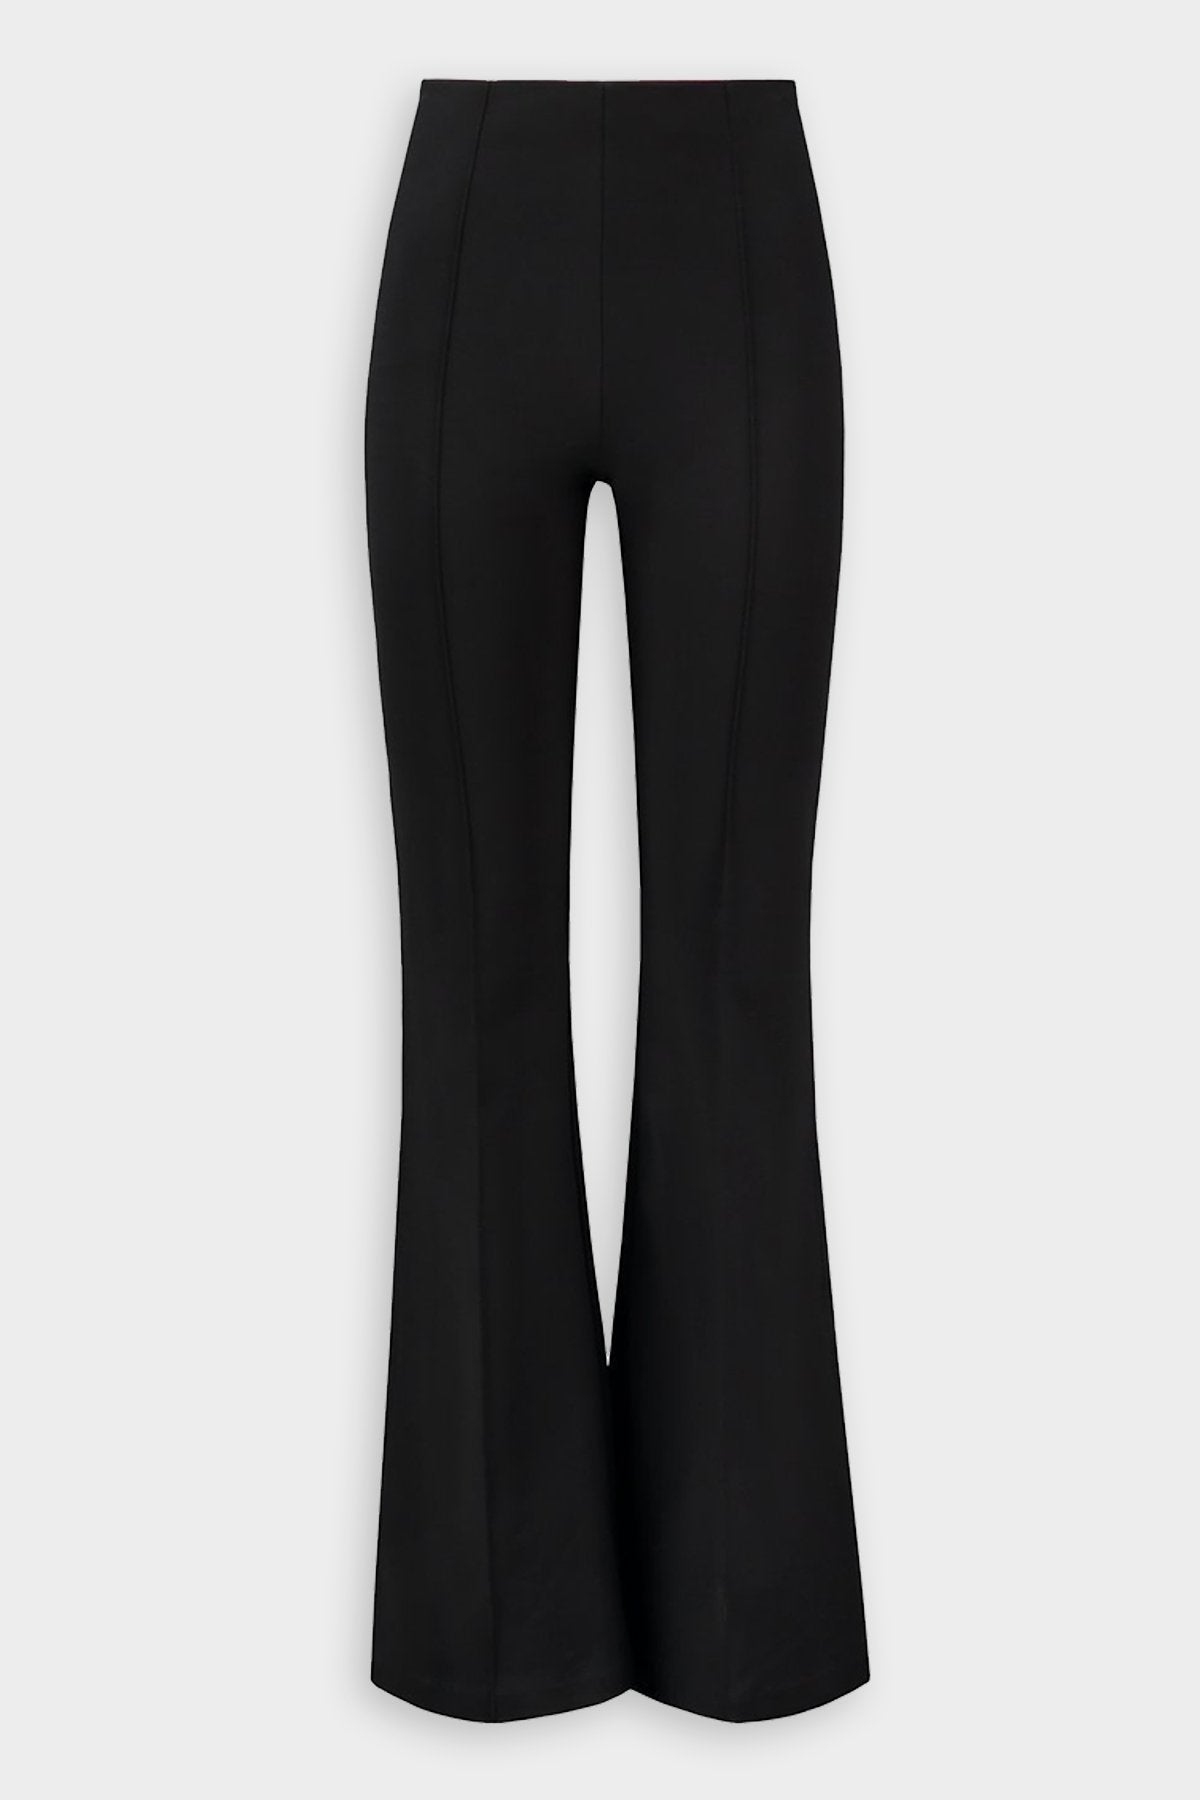 Savanna Flared Stretch Pants in Black - shop-olivia.com